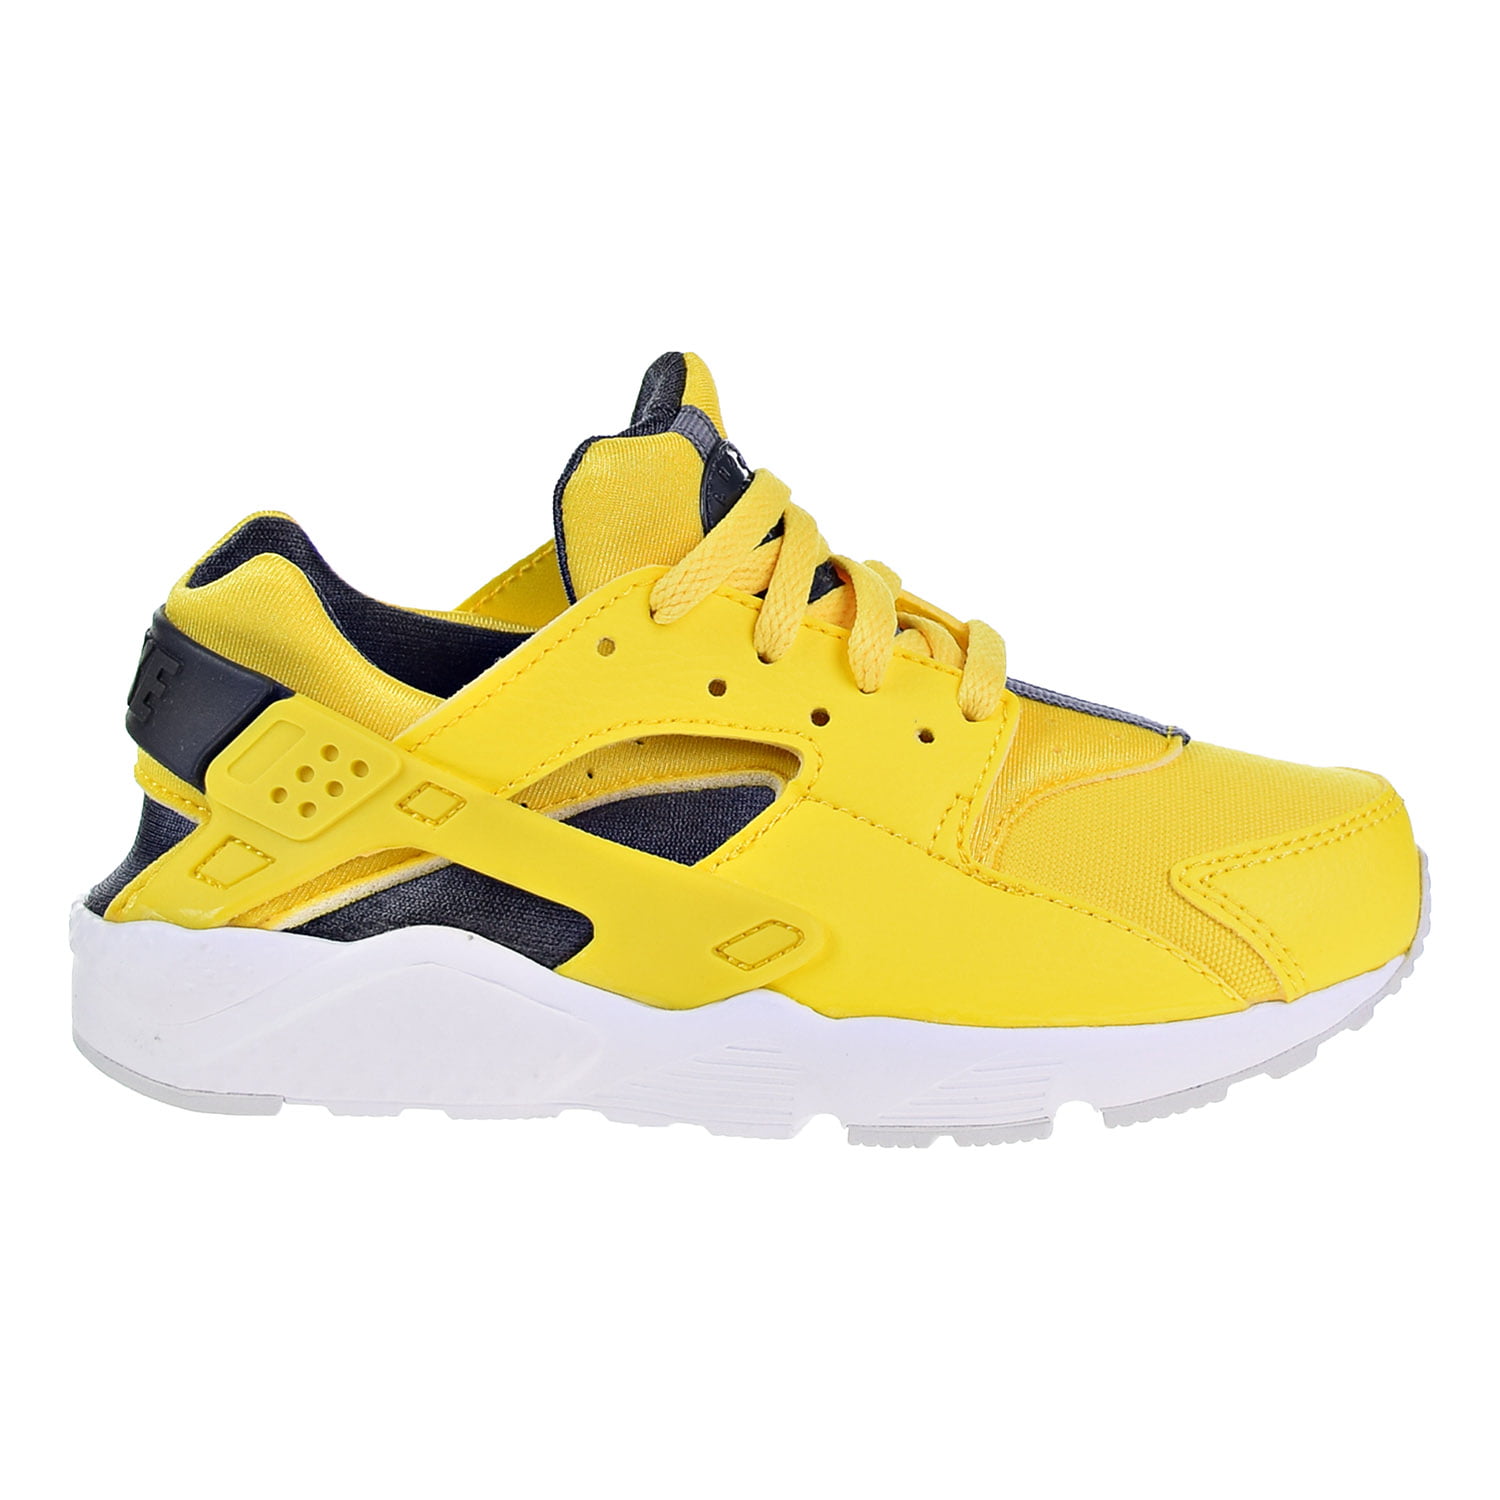 Nike Huarache Run Little Kids Running Shoes Tour Yellow/Anthracite/White 704949-700